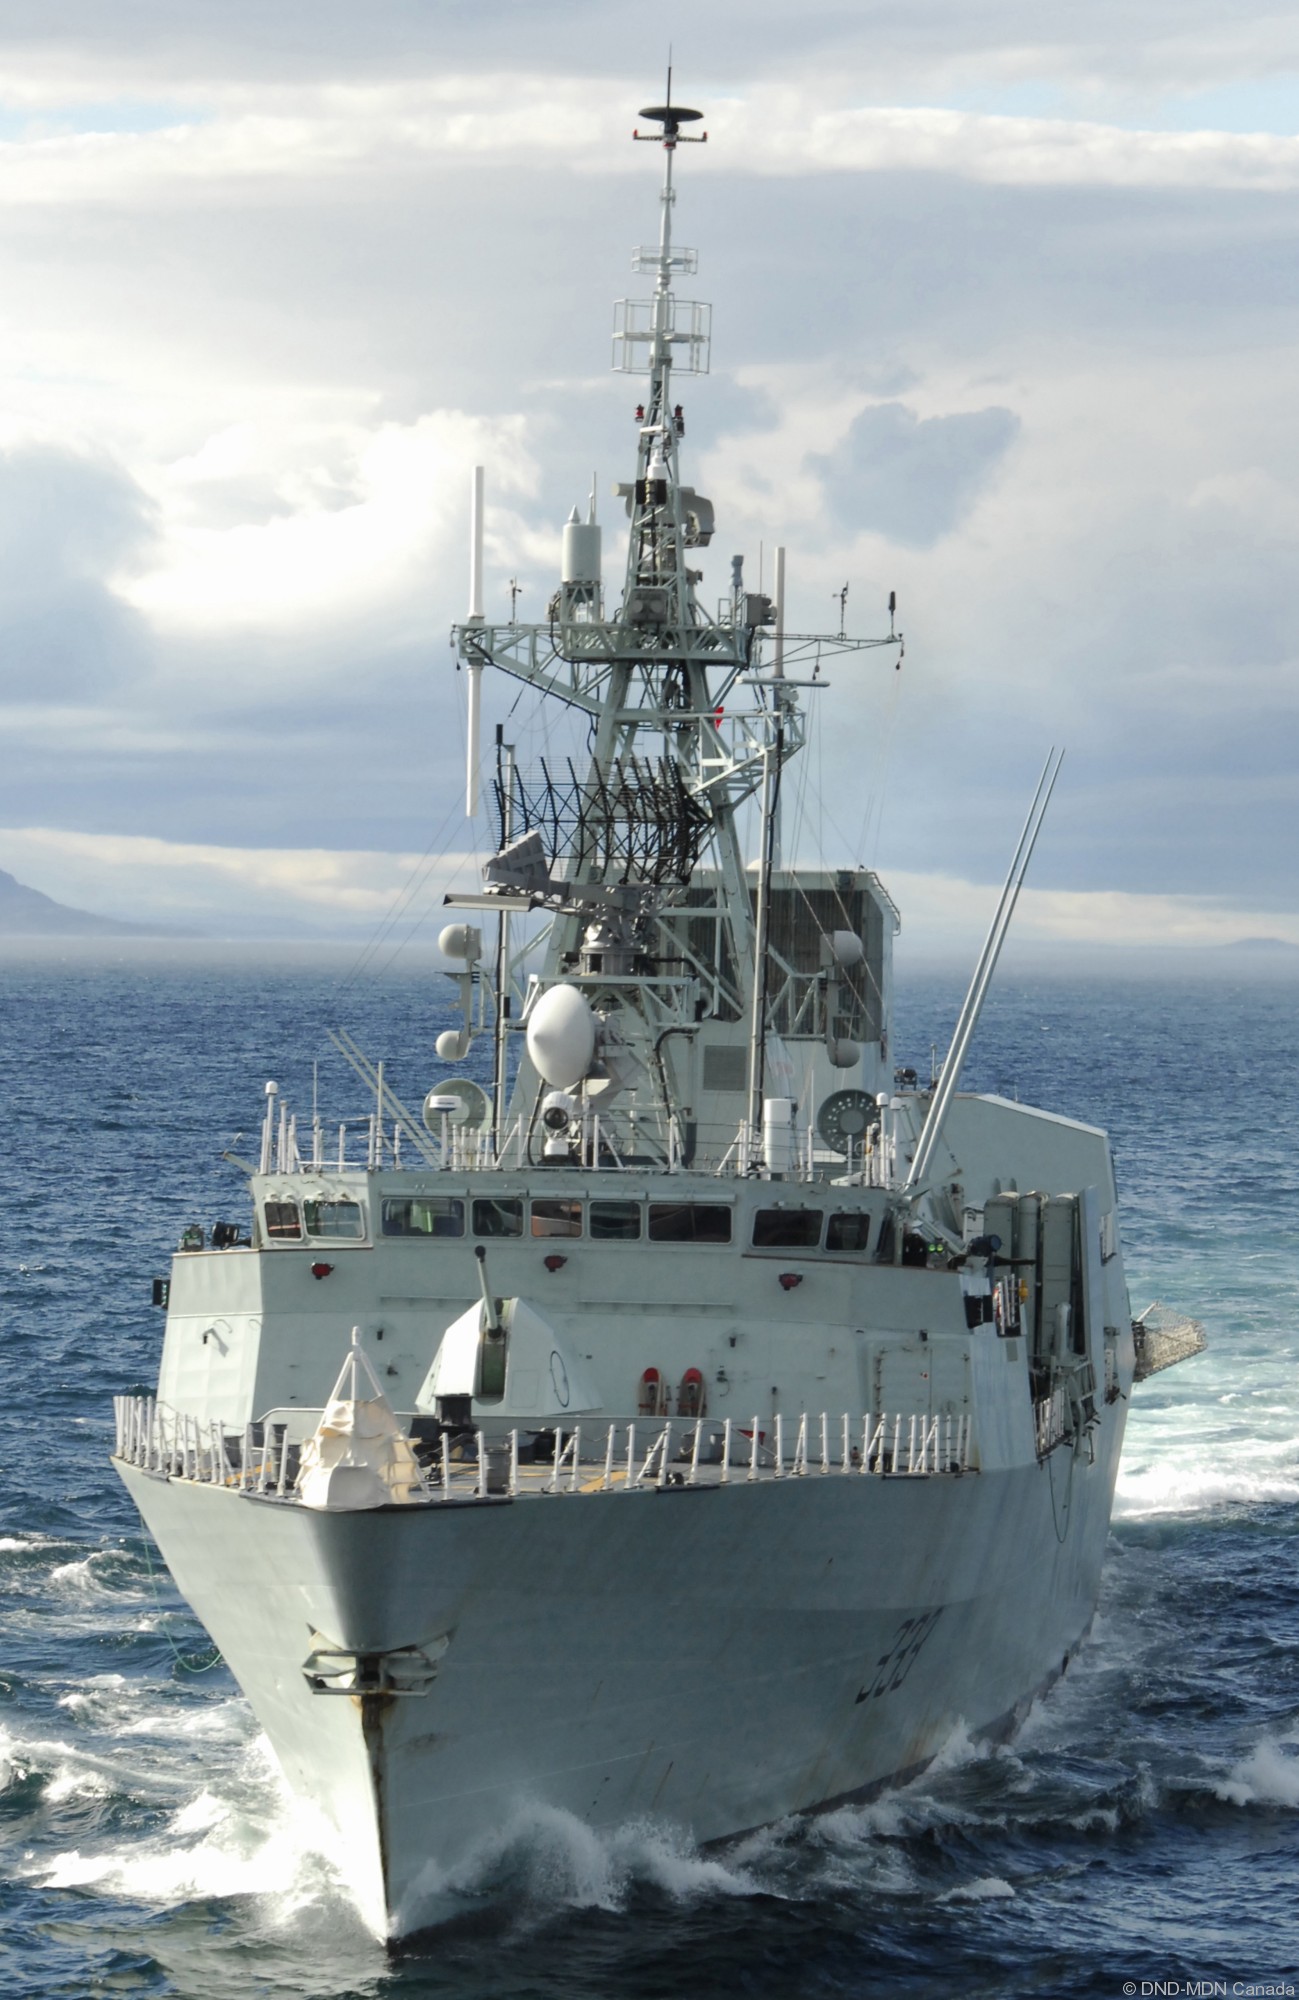 ffh-333 hmcs toronto halifax class helicopter patrol frigate ncsm royal canadian navy 56